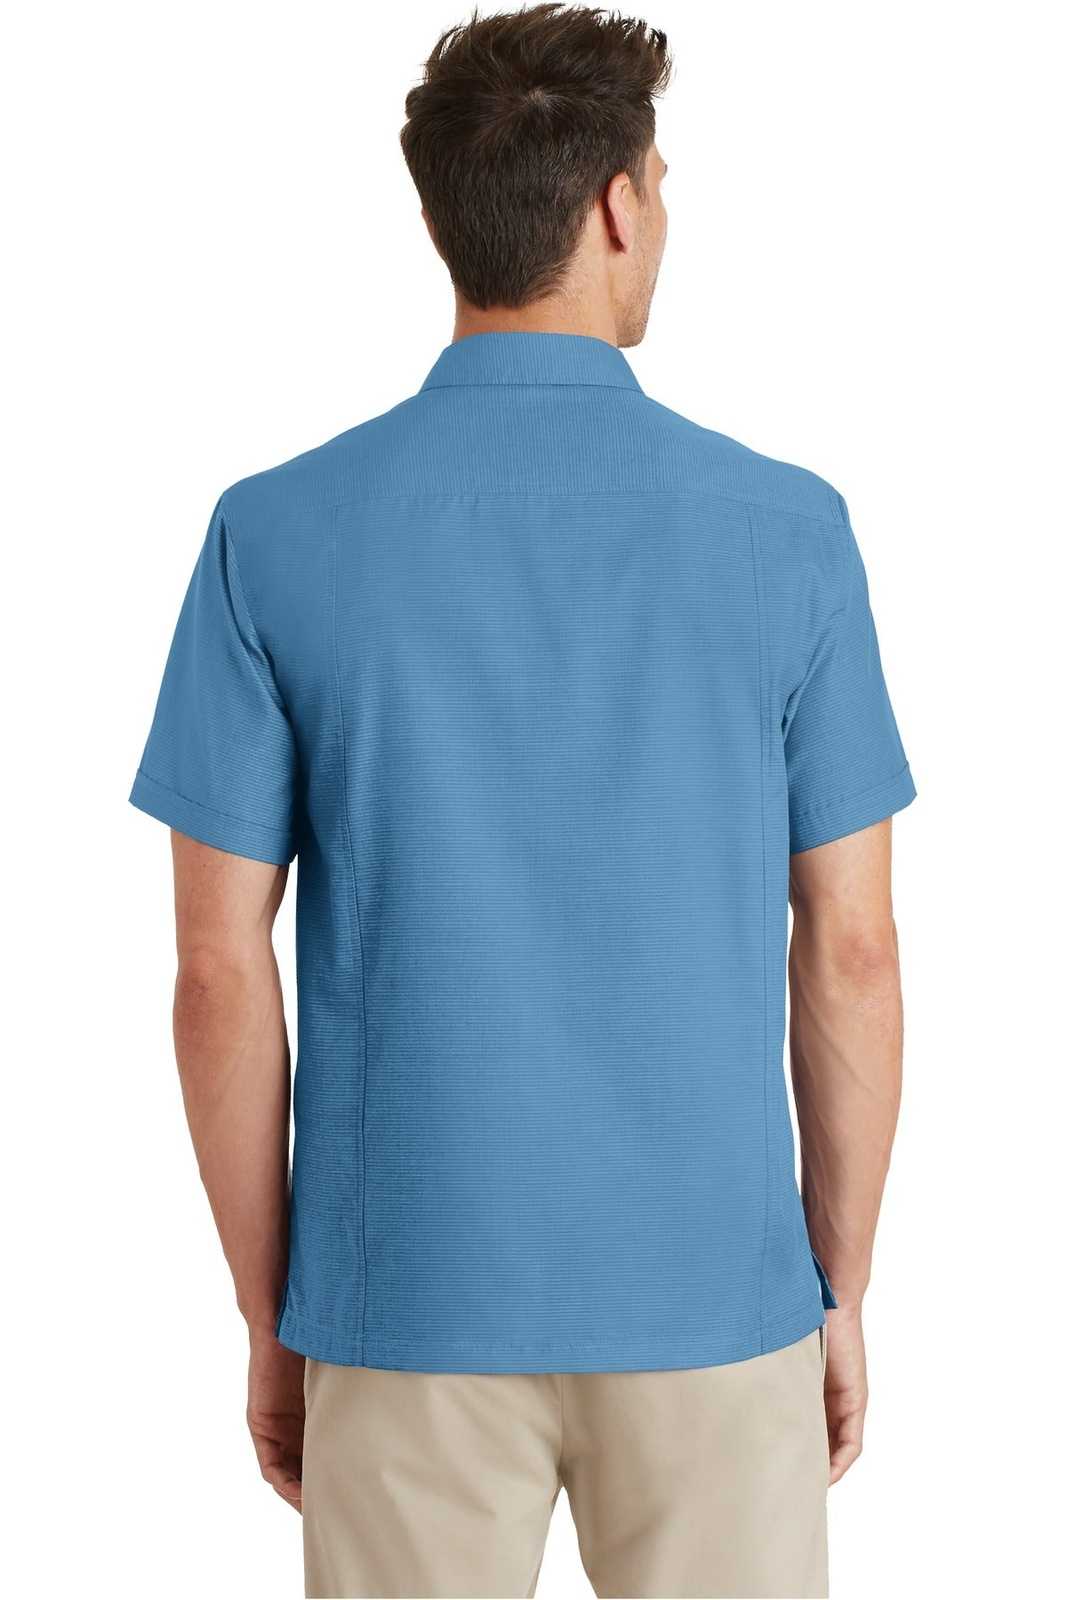 Port Authority S662 Textured Camp Shirt - Celadon - HIT a Double - 1